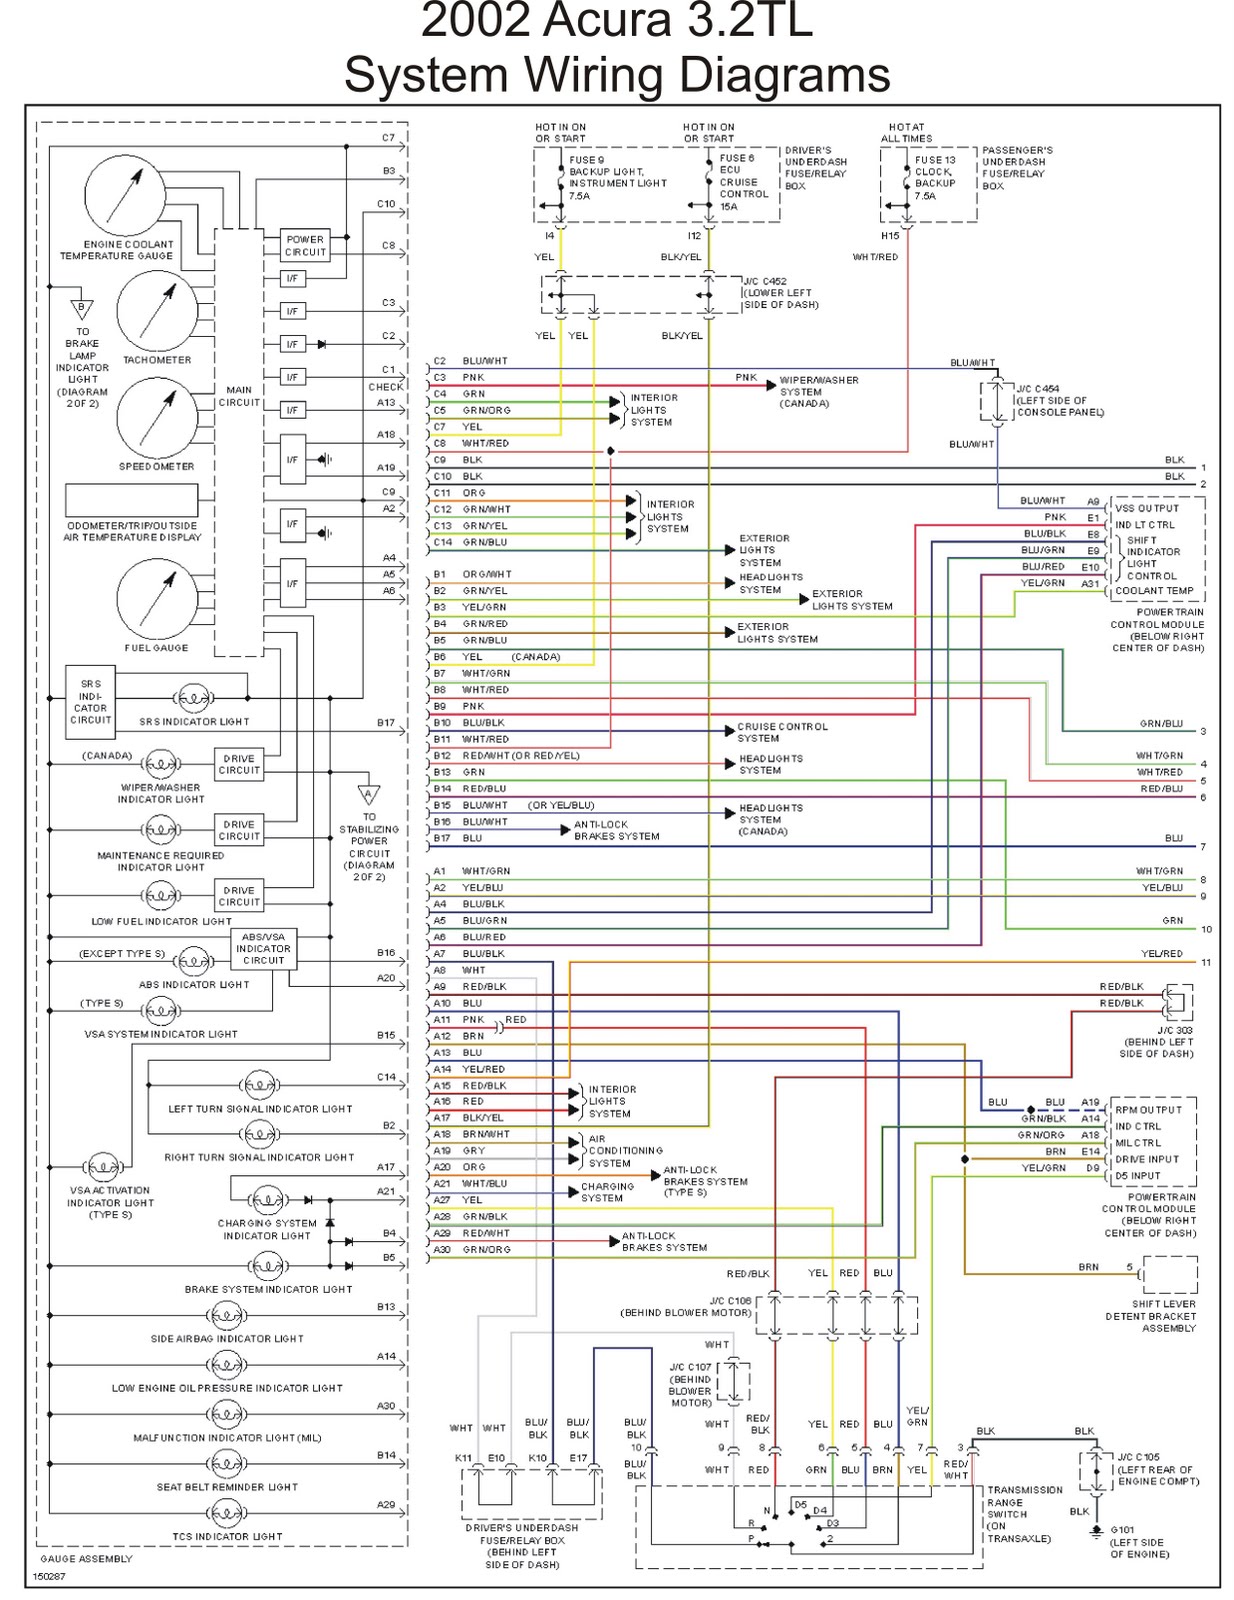 2004 acura mdx radio factory wiring diagram key1